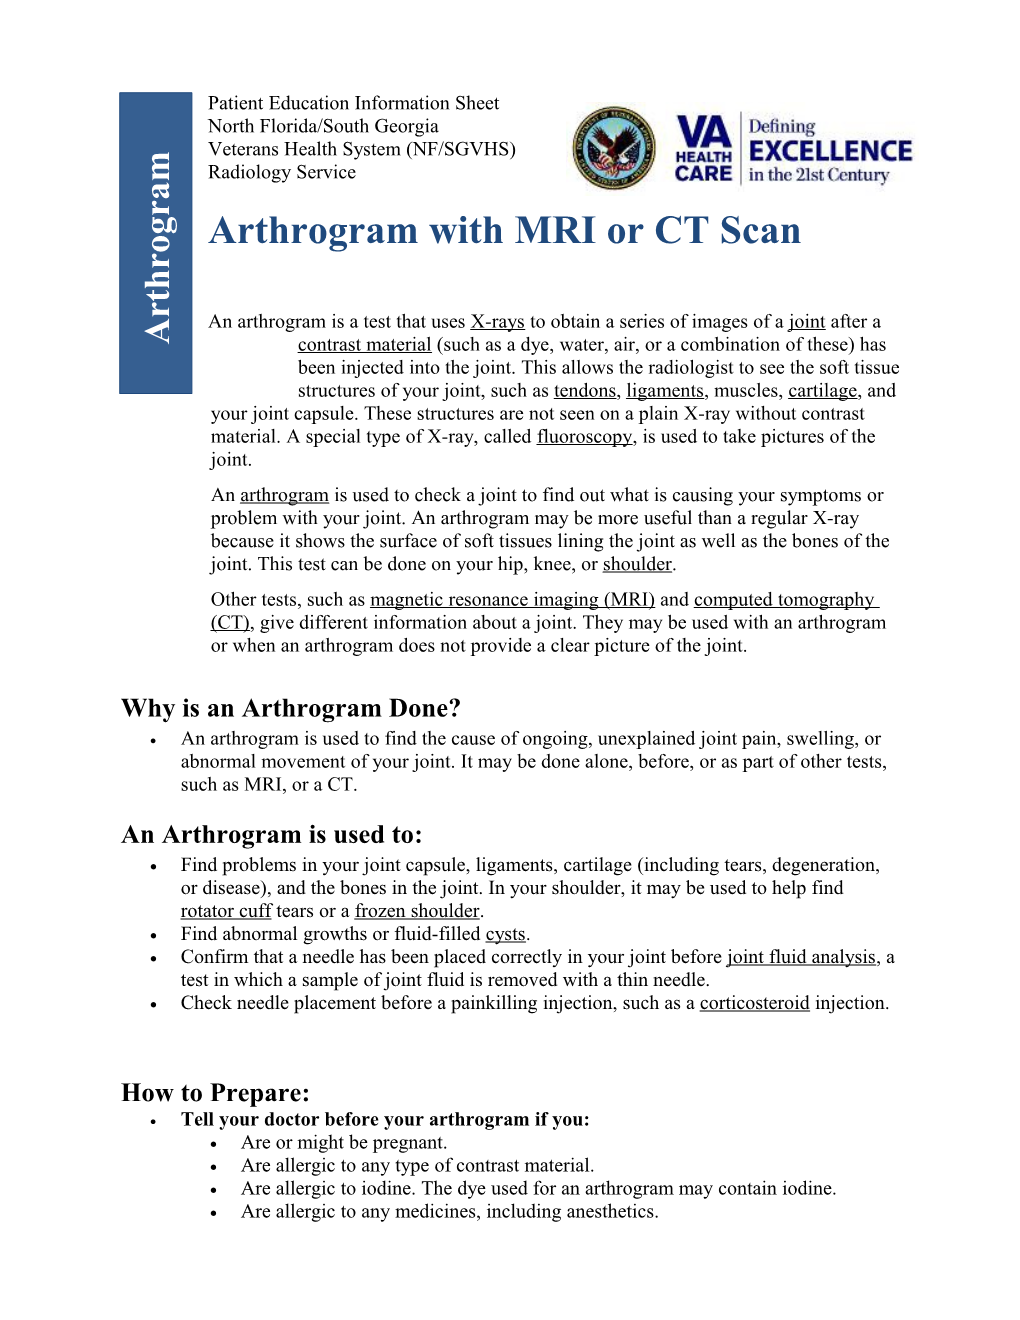 Arthrogram with MRI Or CT Scan